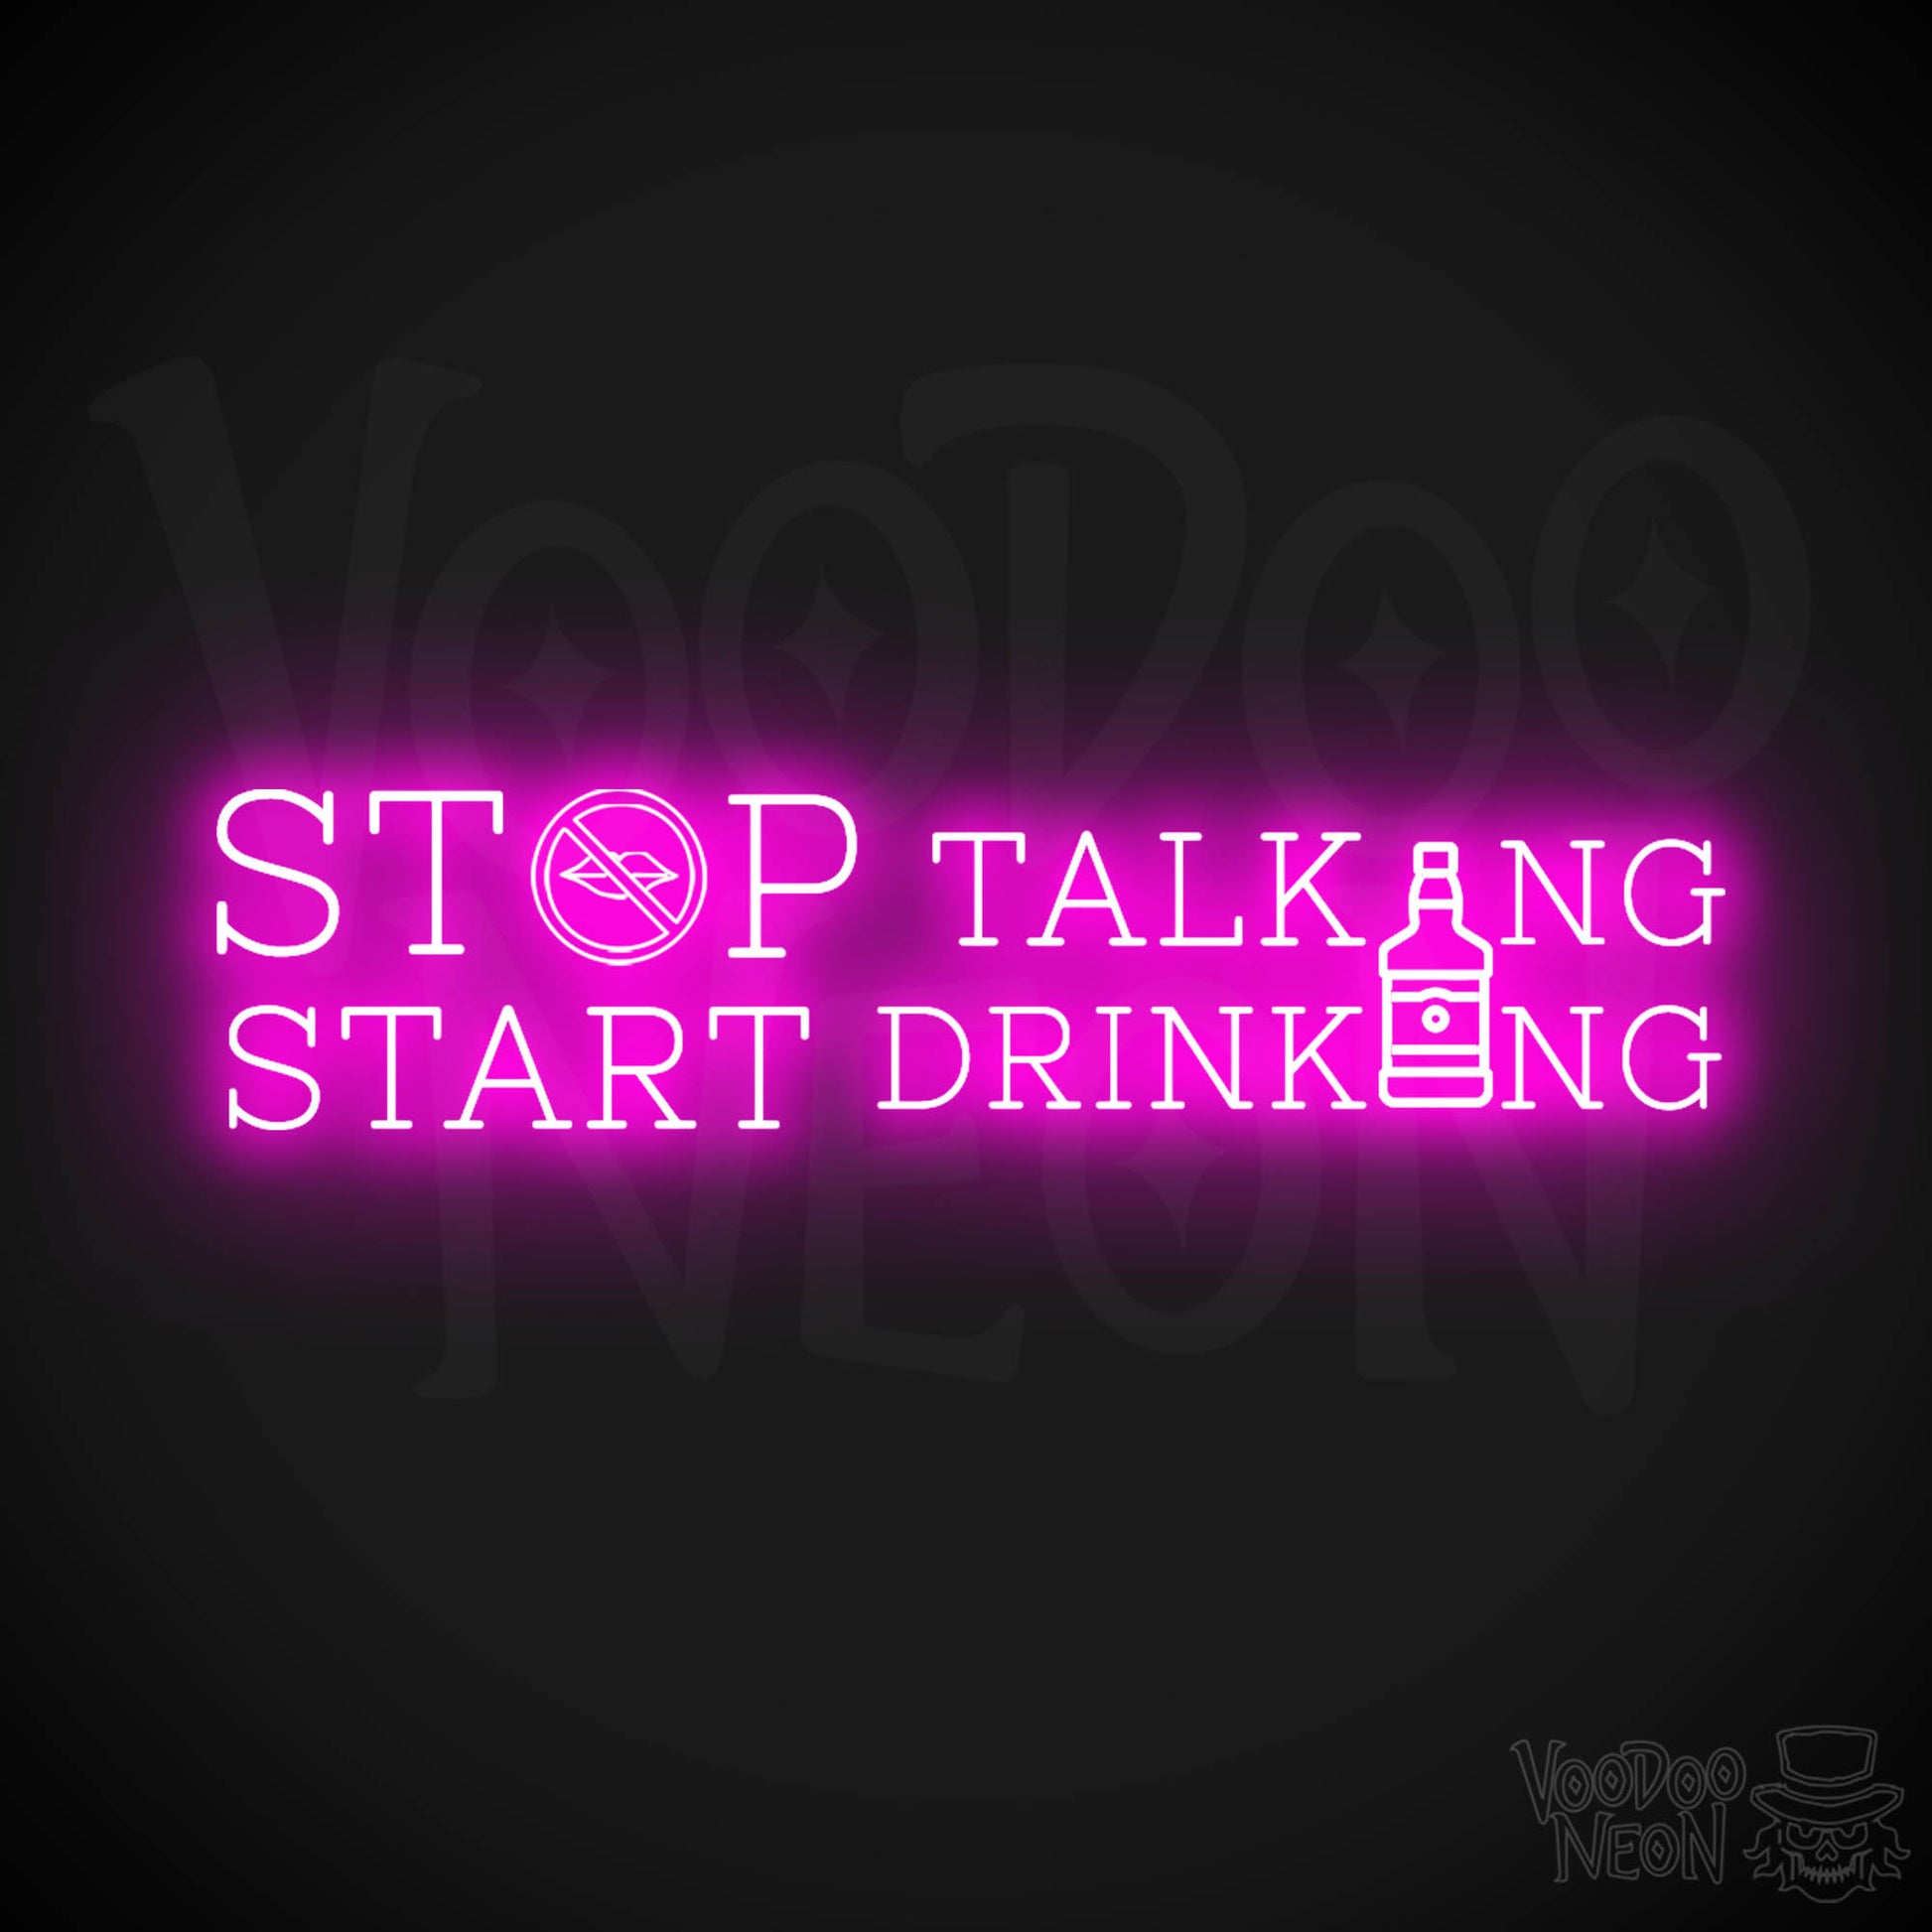 Stop Talking Start Drinking Neon Sign - Stop Talking Start Drinking Sign - Color Pink